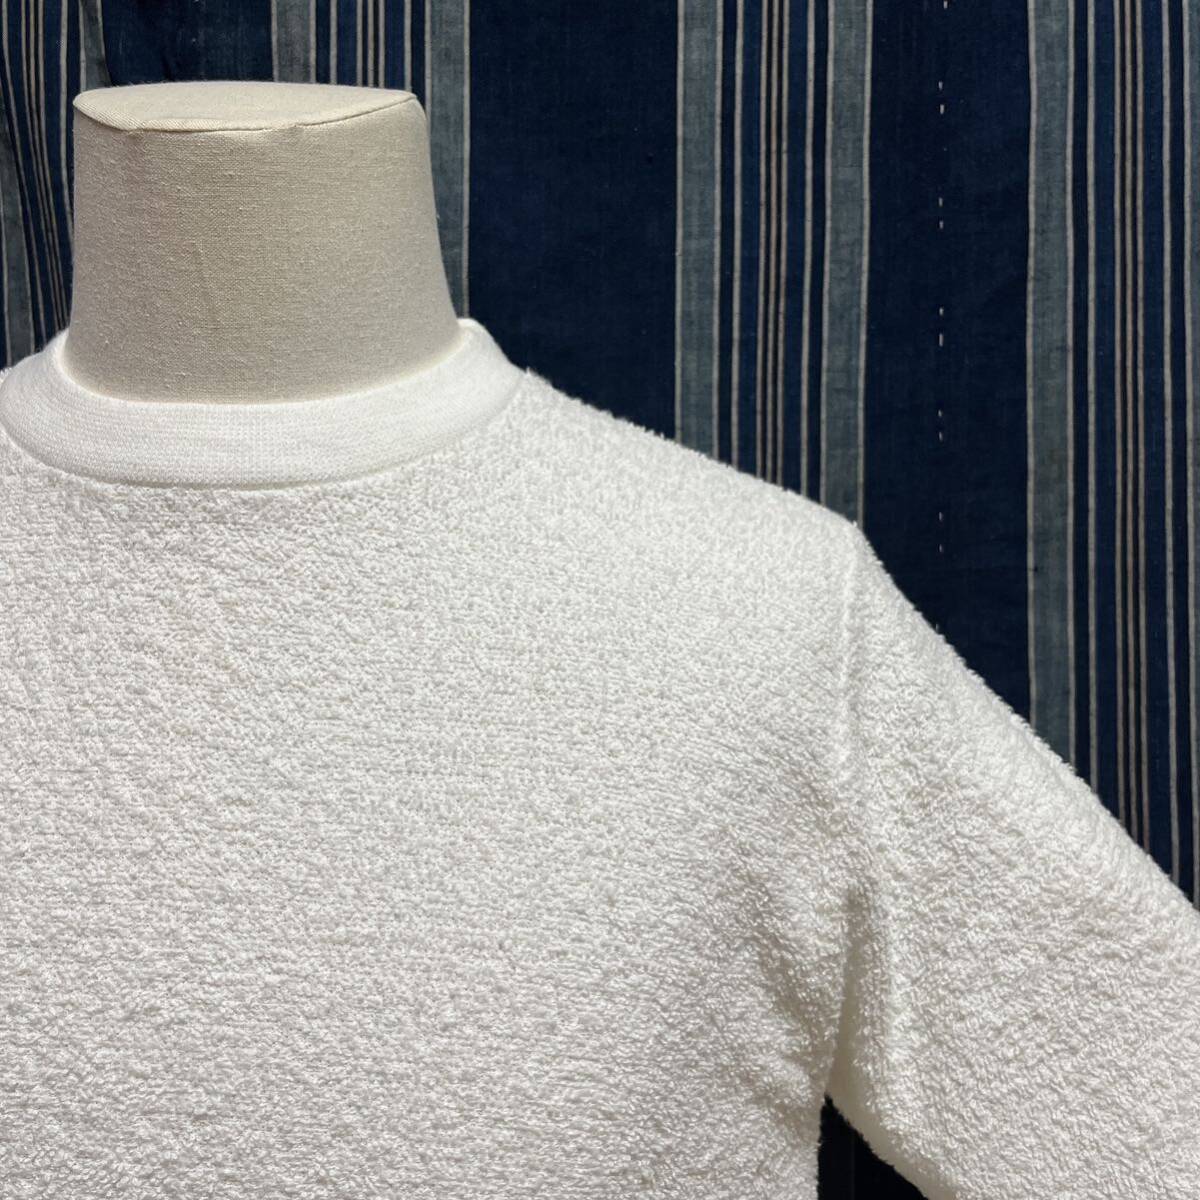 rare パイル地 40s 50s 60s 70s auburn knitwear tshirt pile fabric usa 40年代 50年代 60年代 70年代 アメリカ製 白t_画像1